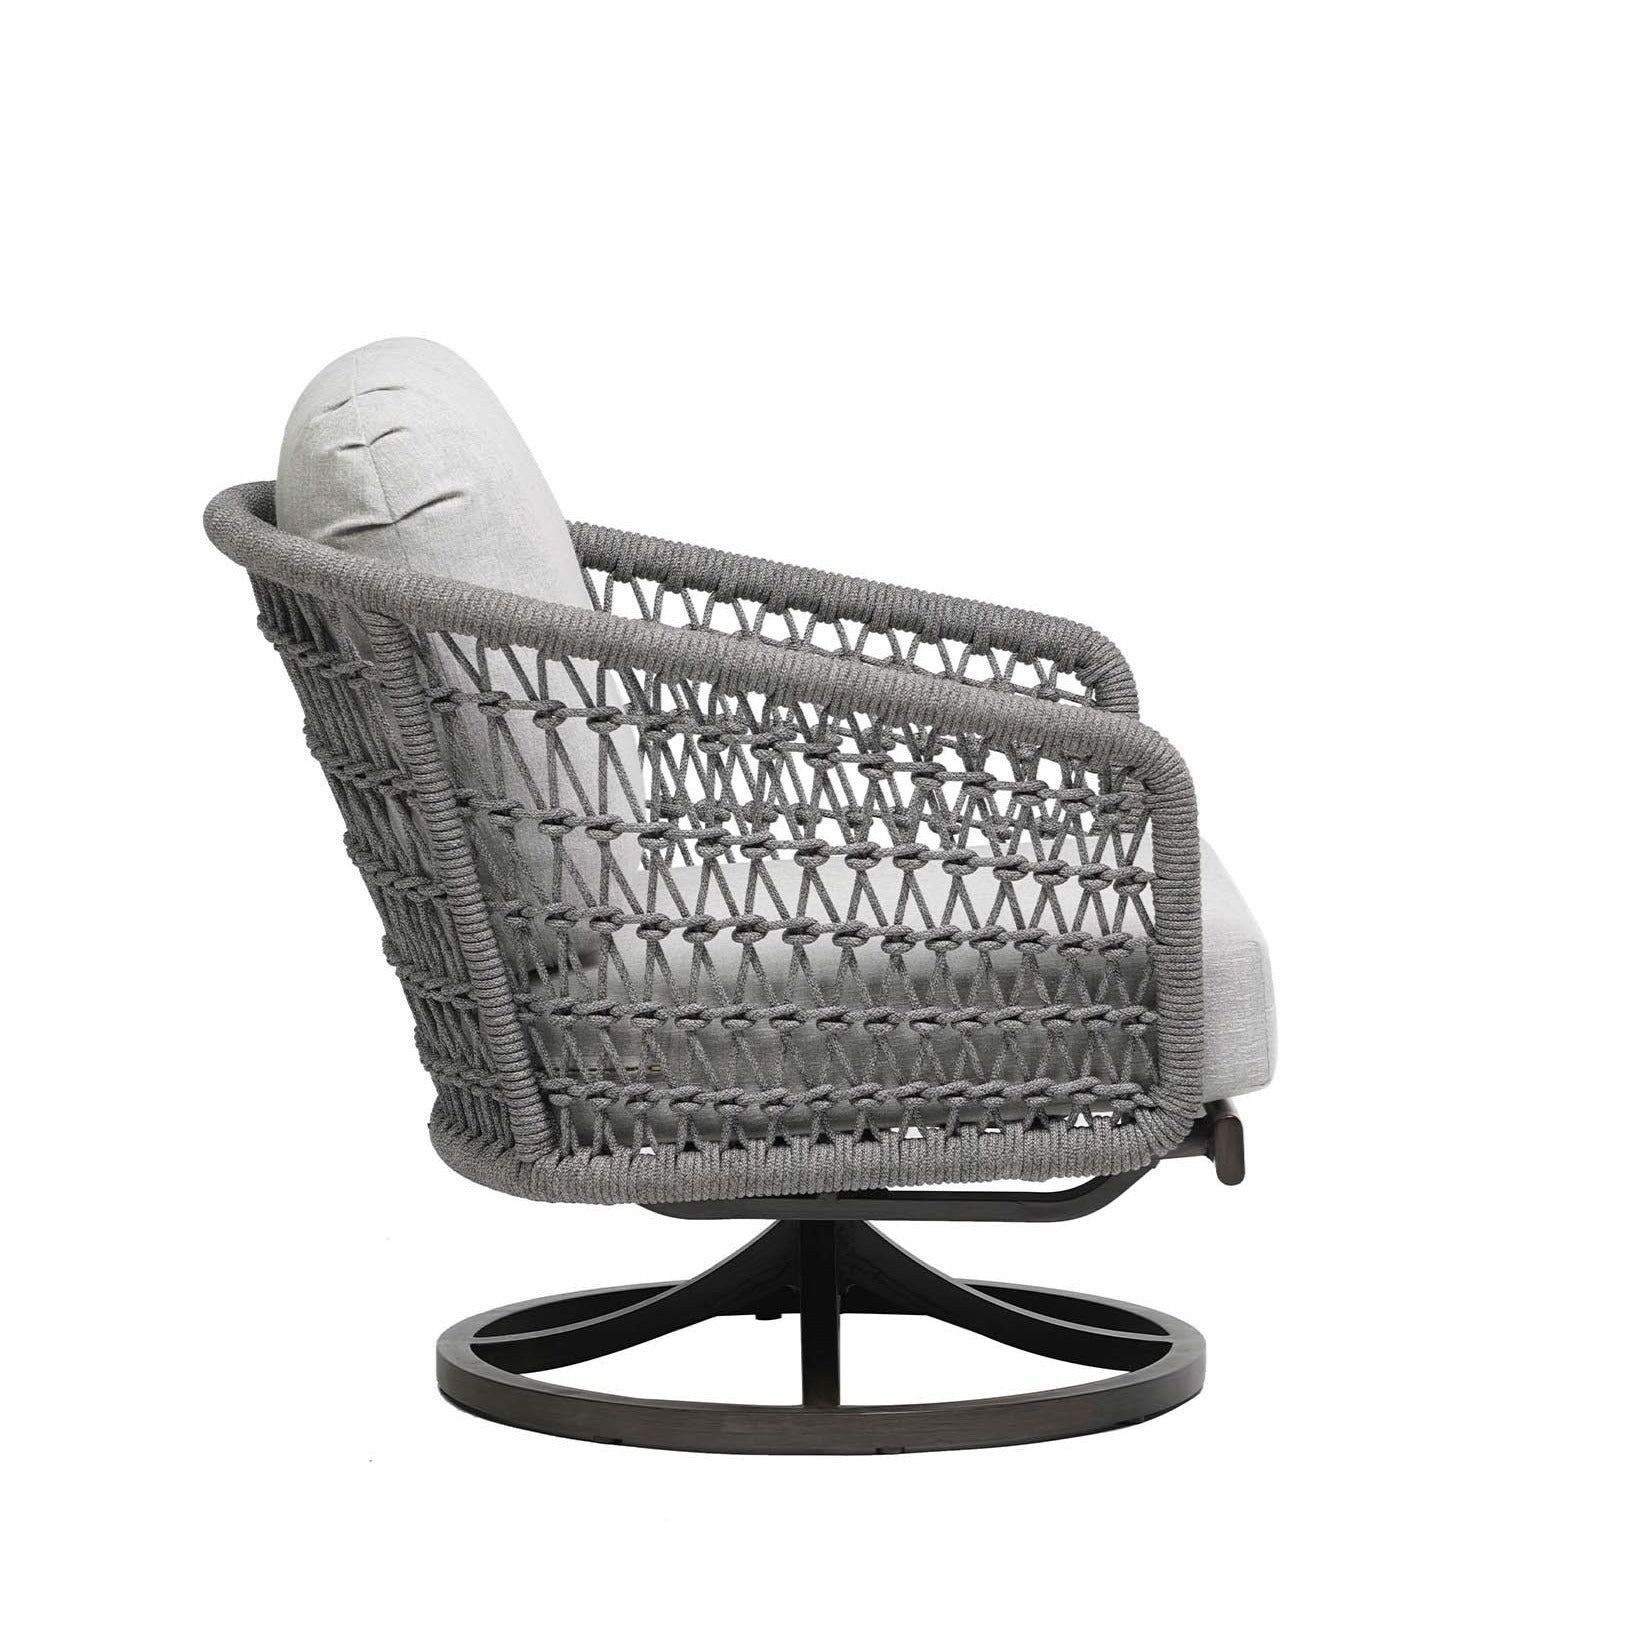 Ratana Poinciana Swivel Rocking Lounge Chair with Cast Silver Cushions 12041236